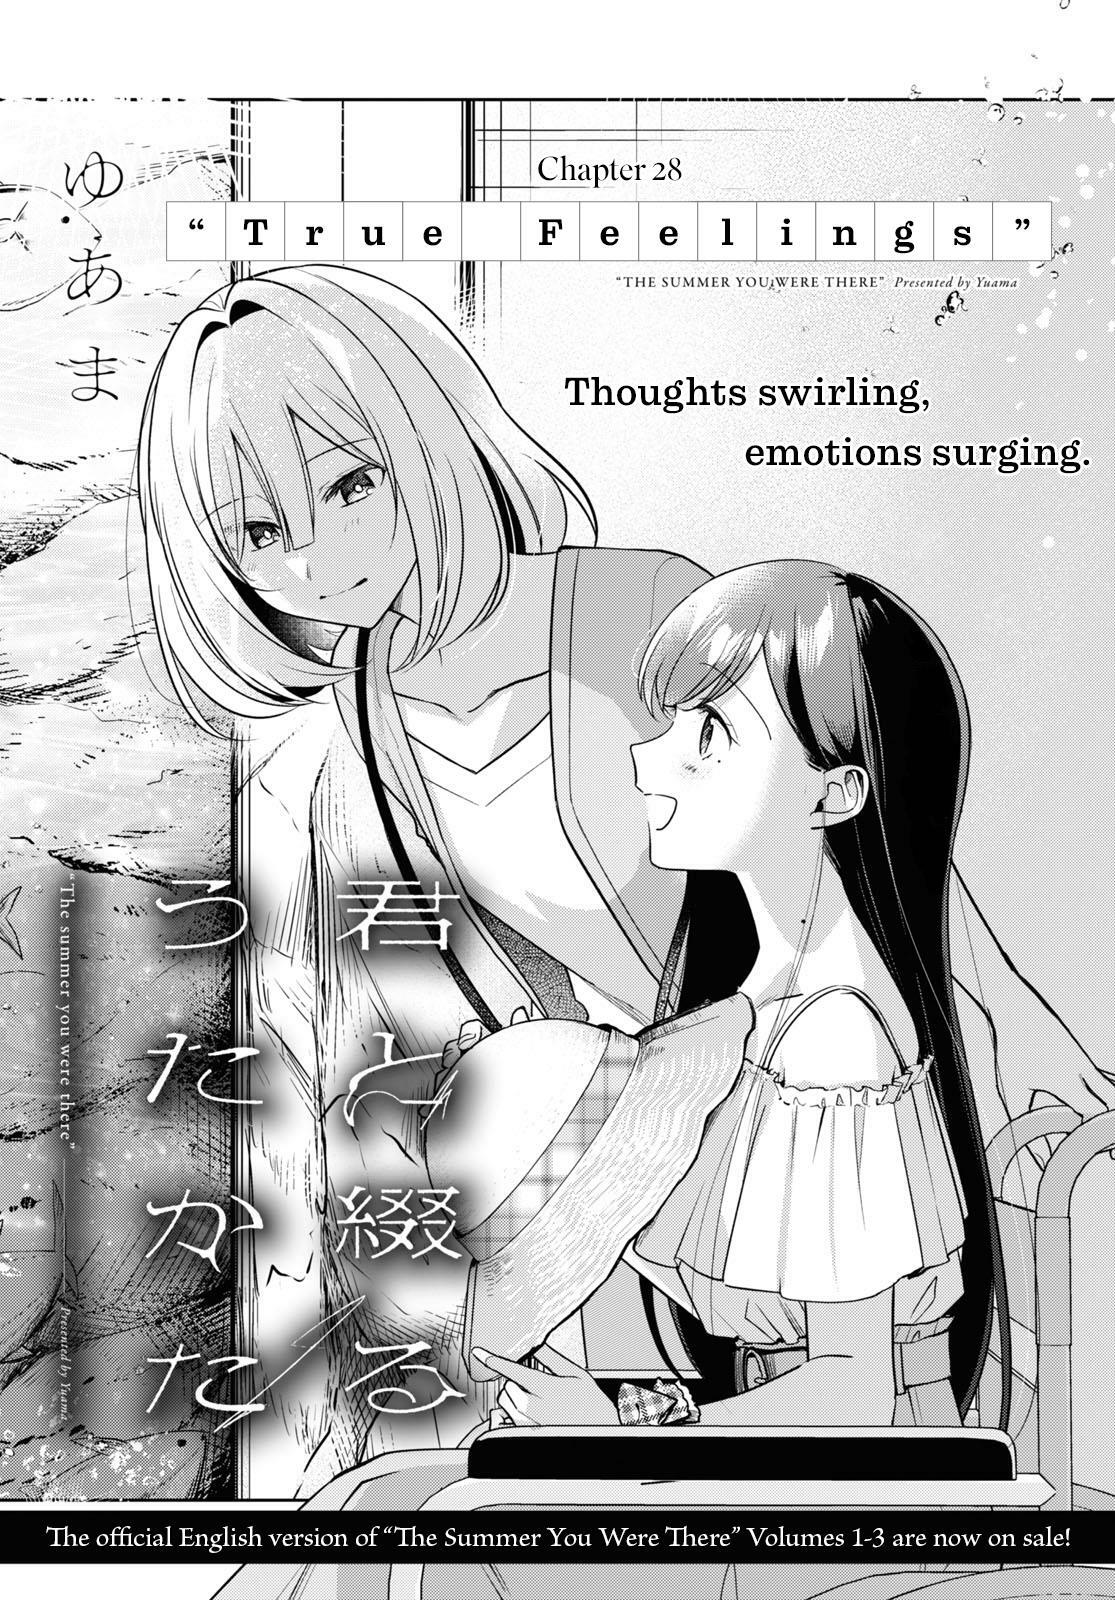 In The Summer Chapter 28 Read Kimi To Tsuzuru Utakata Vol.6 Chapter 28: True Feelings on Mangakakalot